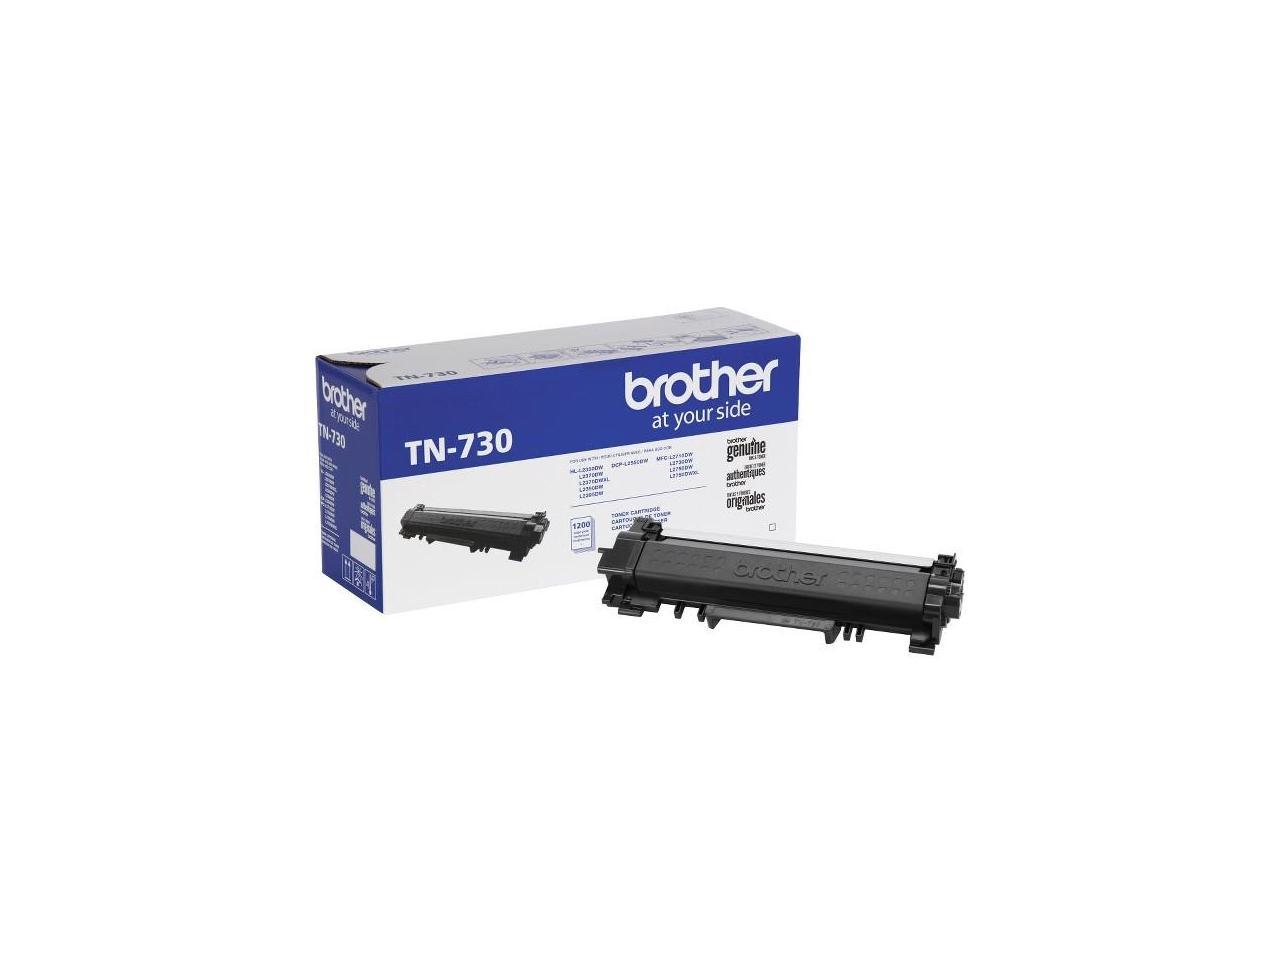 Brother TN730 Toner Cartridge - Black